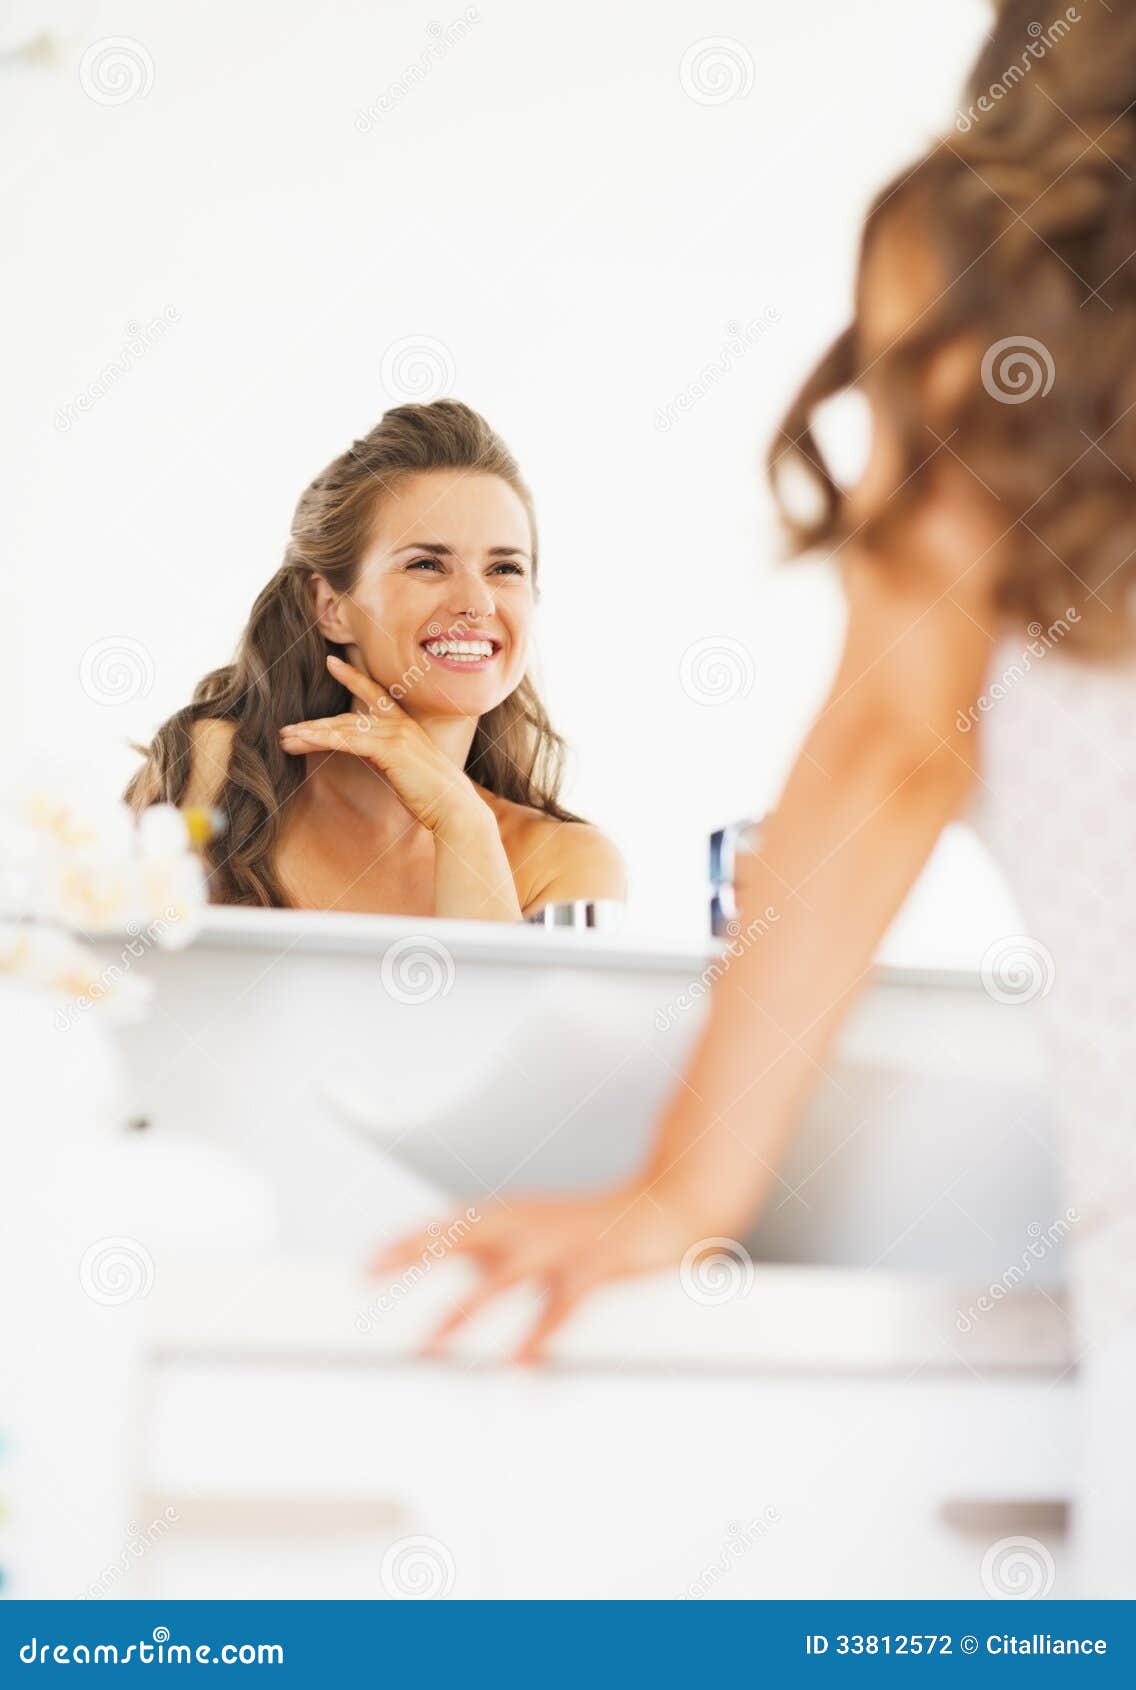 Happy Woman Looking In Mirror In Bathroom Stock Photo ...
